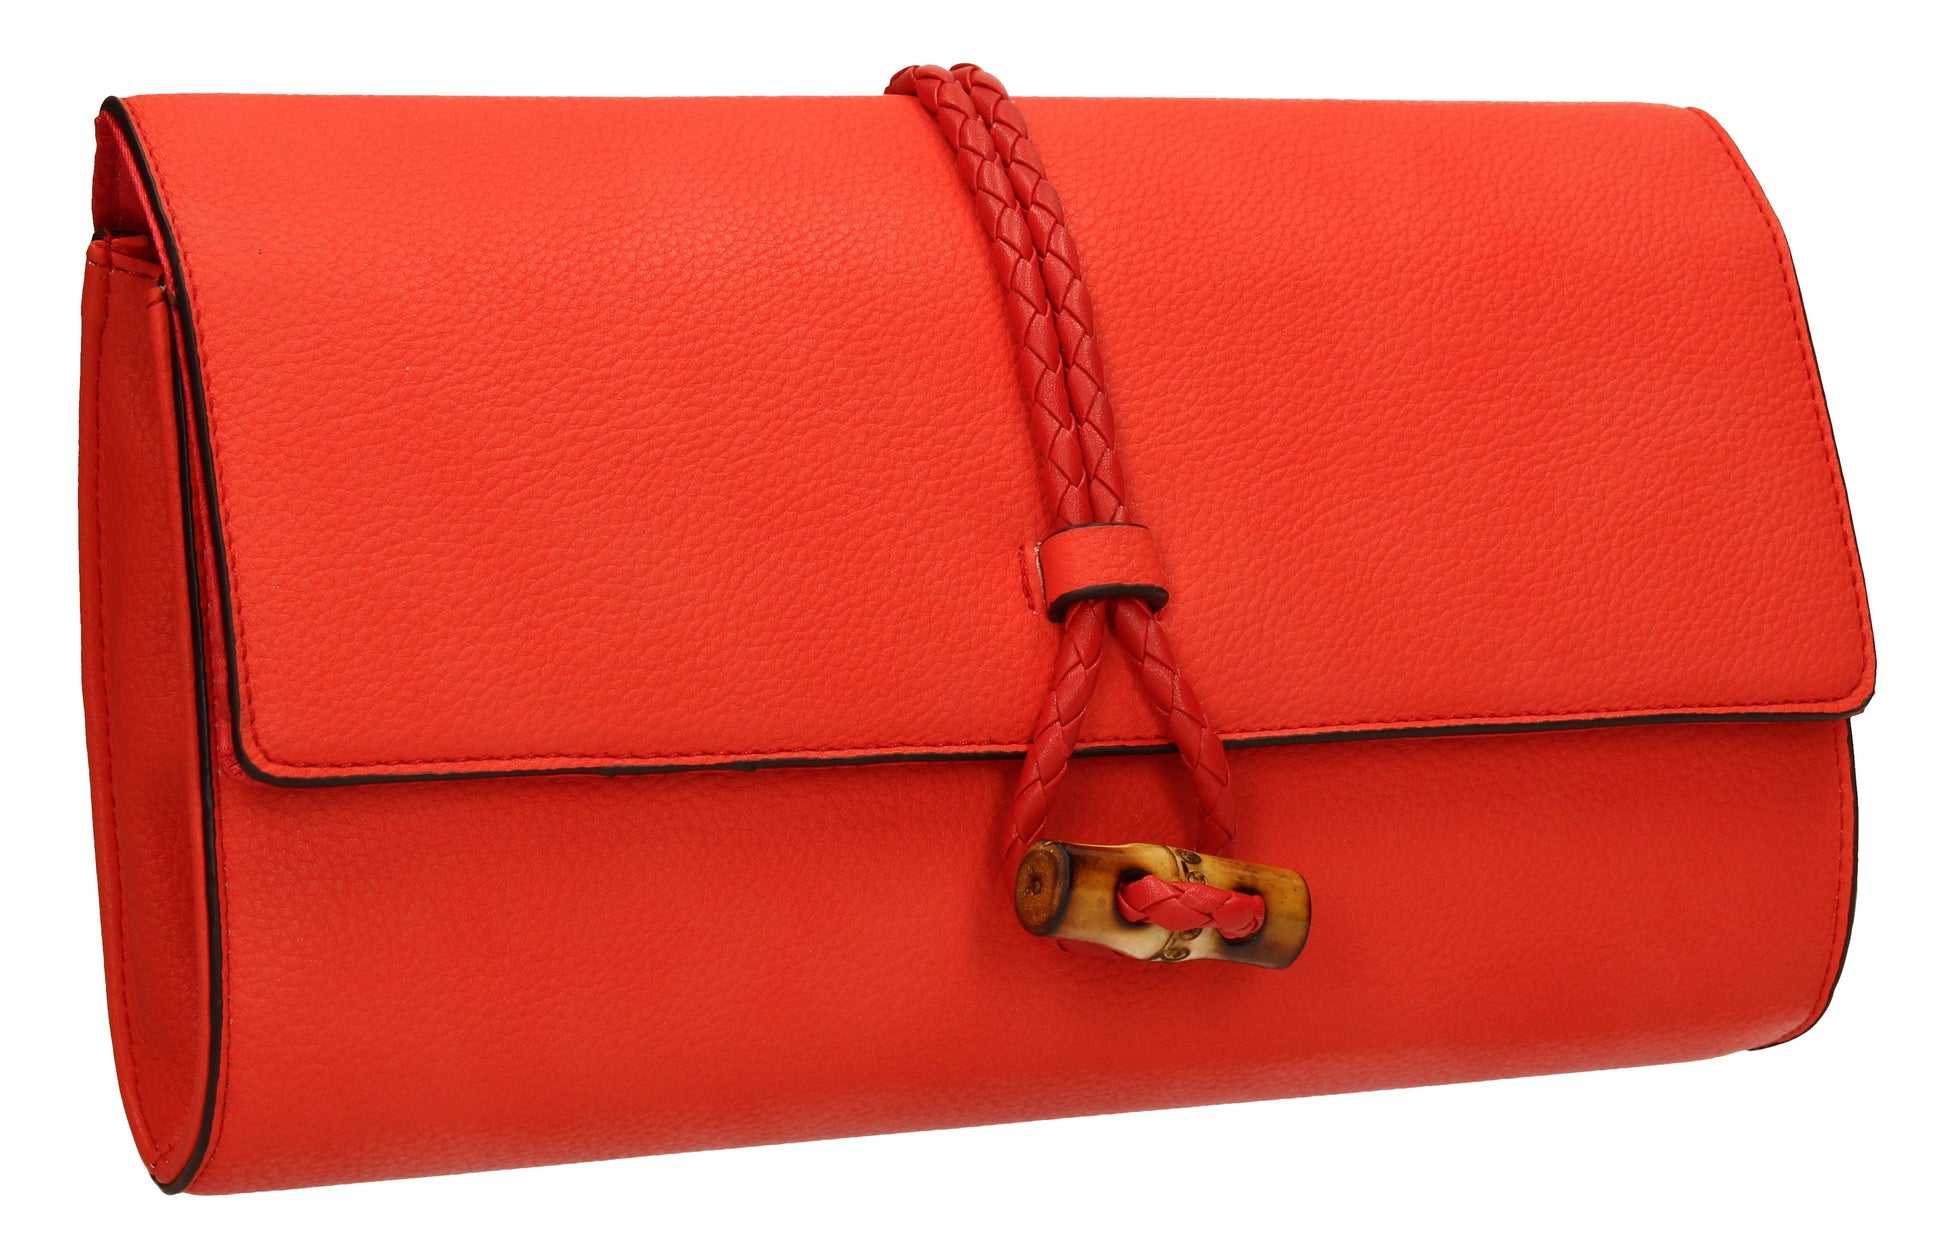 SWANKYSWANS Sophia Clutch Bag Scarlet Cute Cheap Clutch Bag For Weddings School and Work